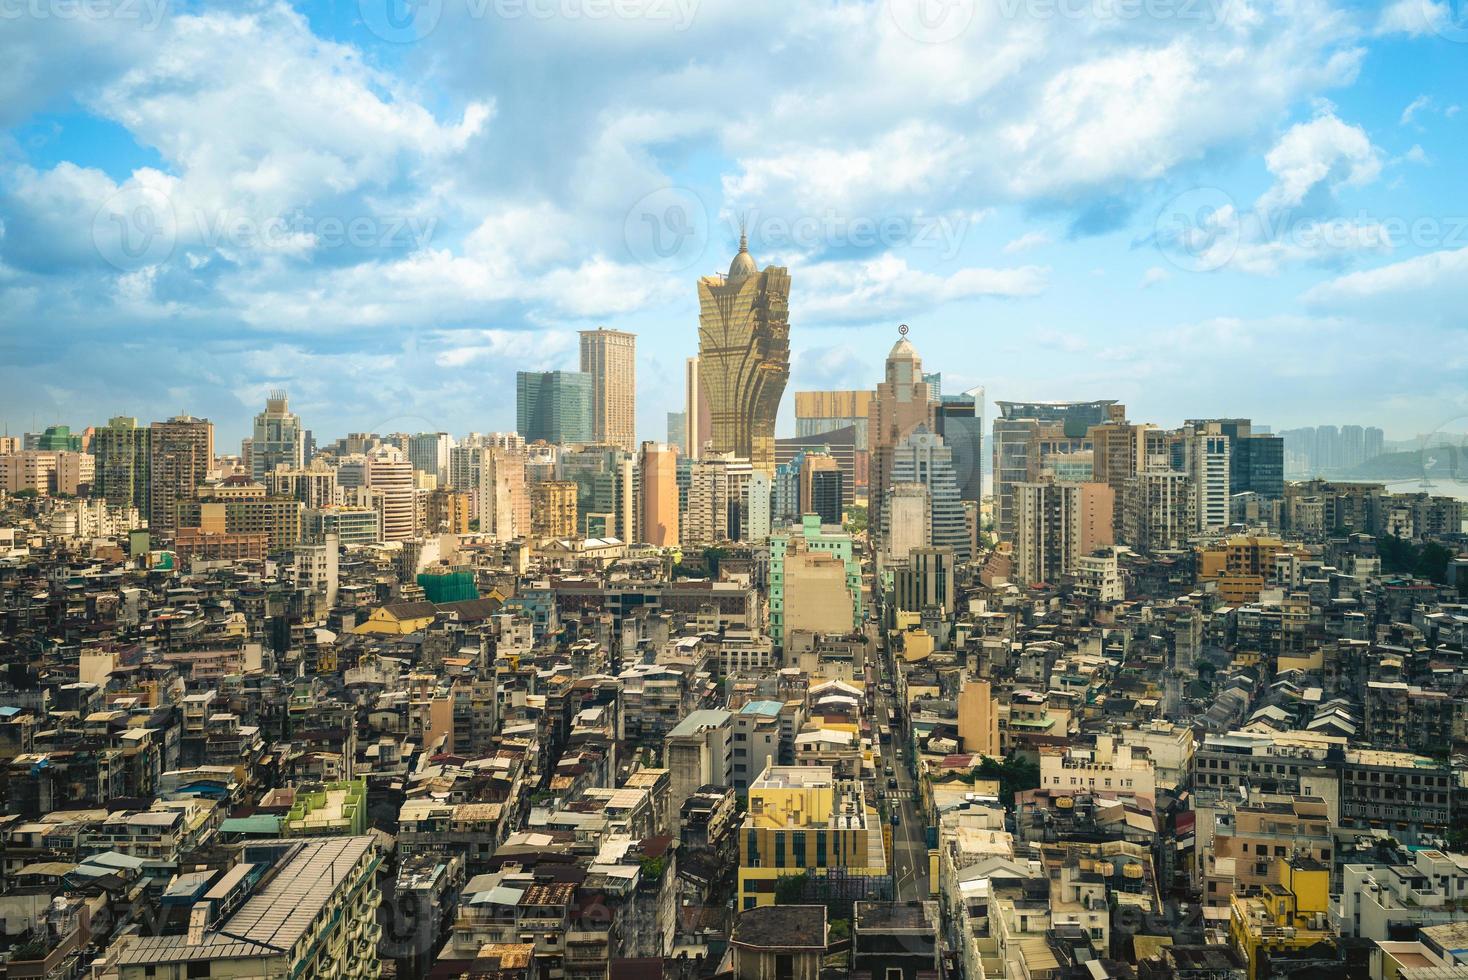 Cityscape of Macau in China photo